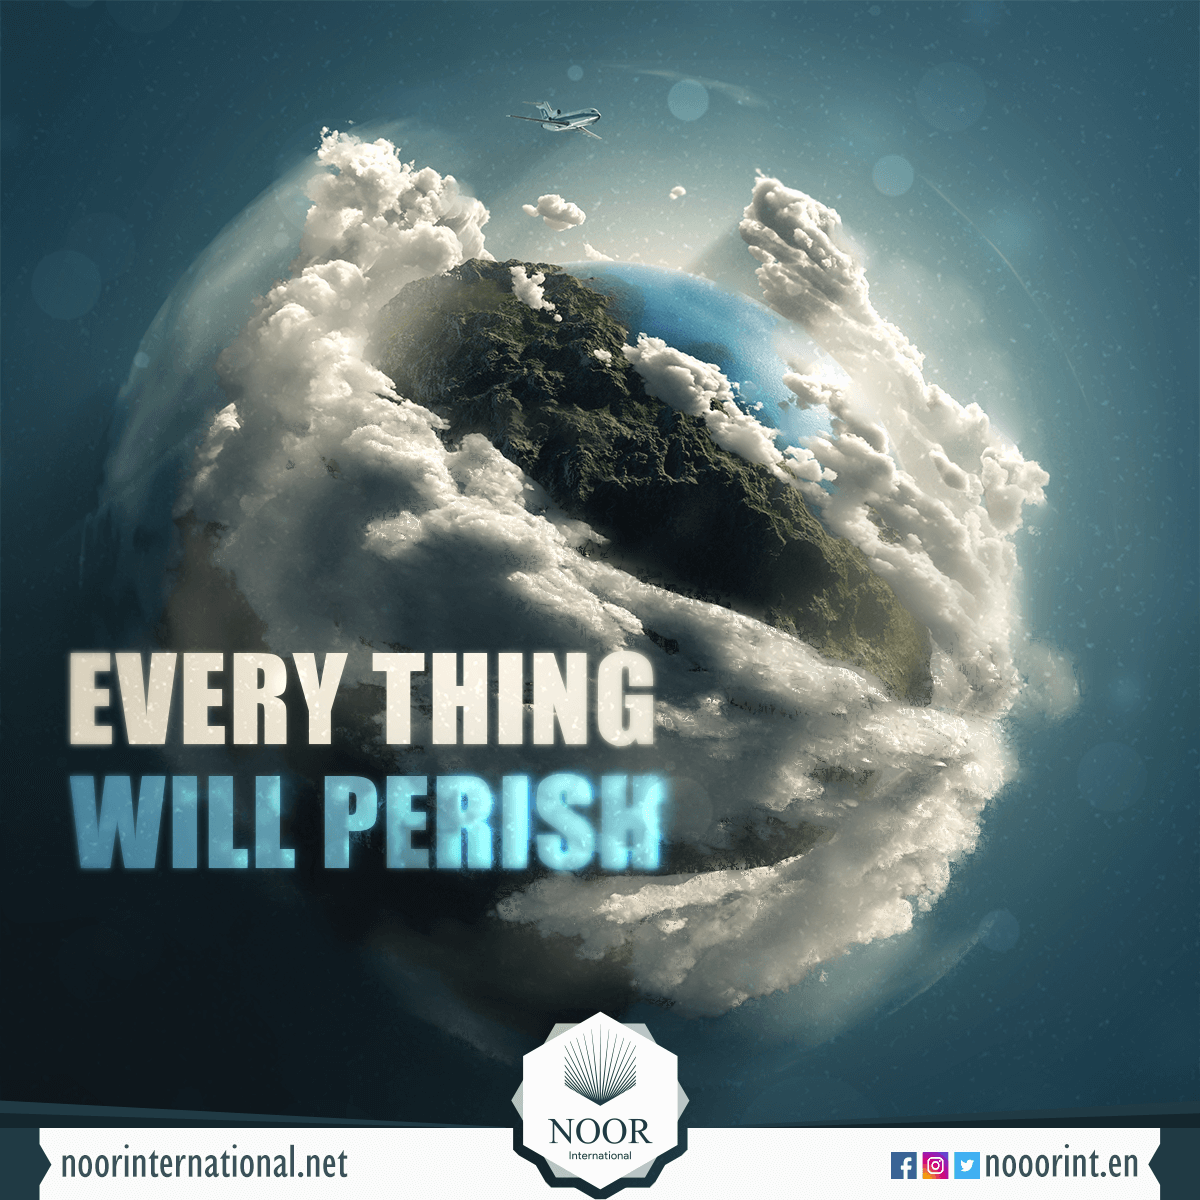 Every thing will perish